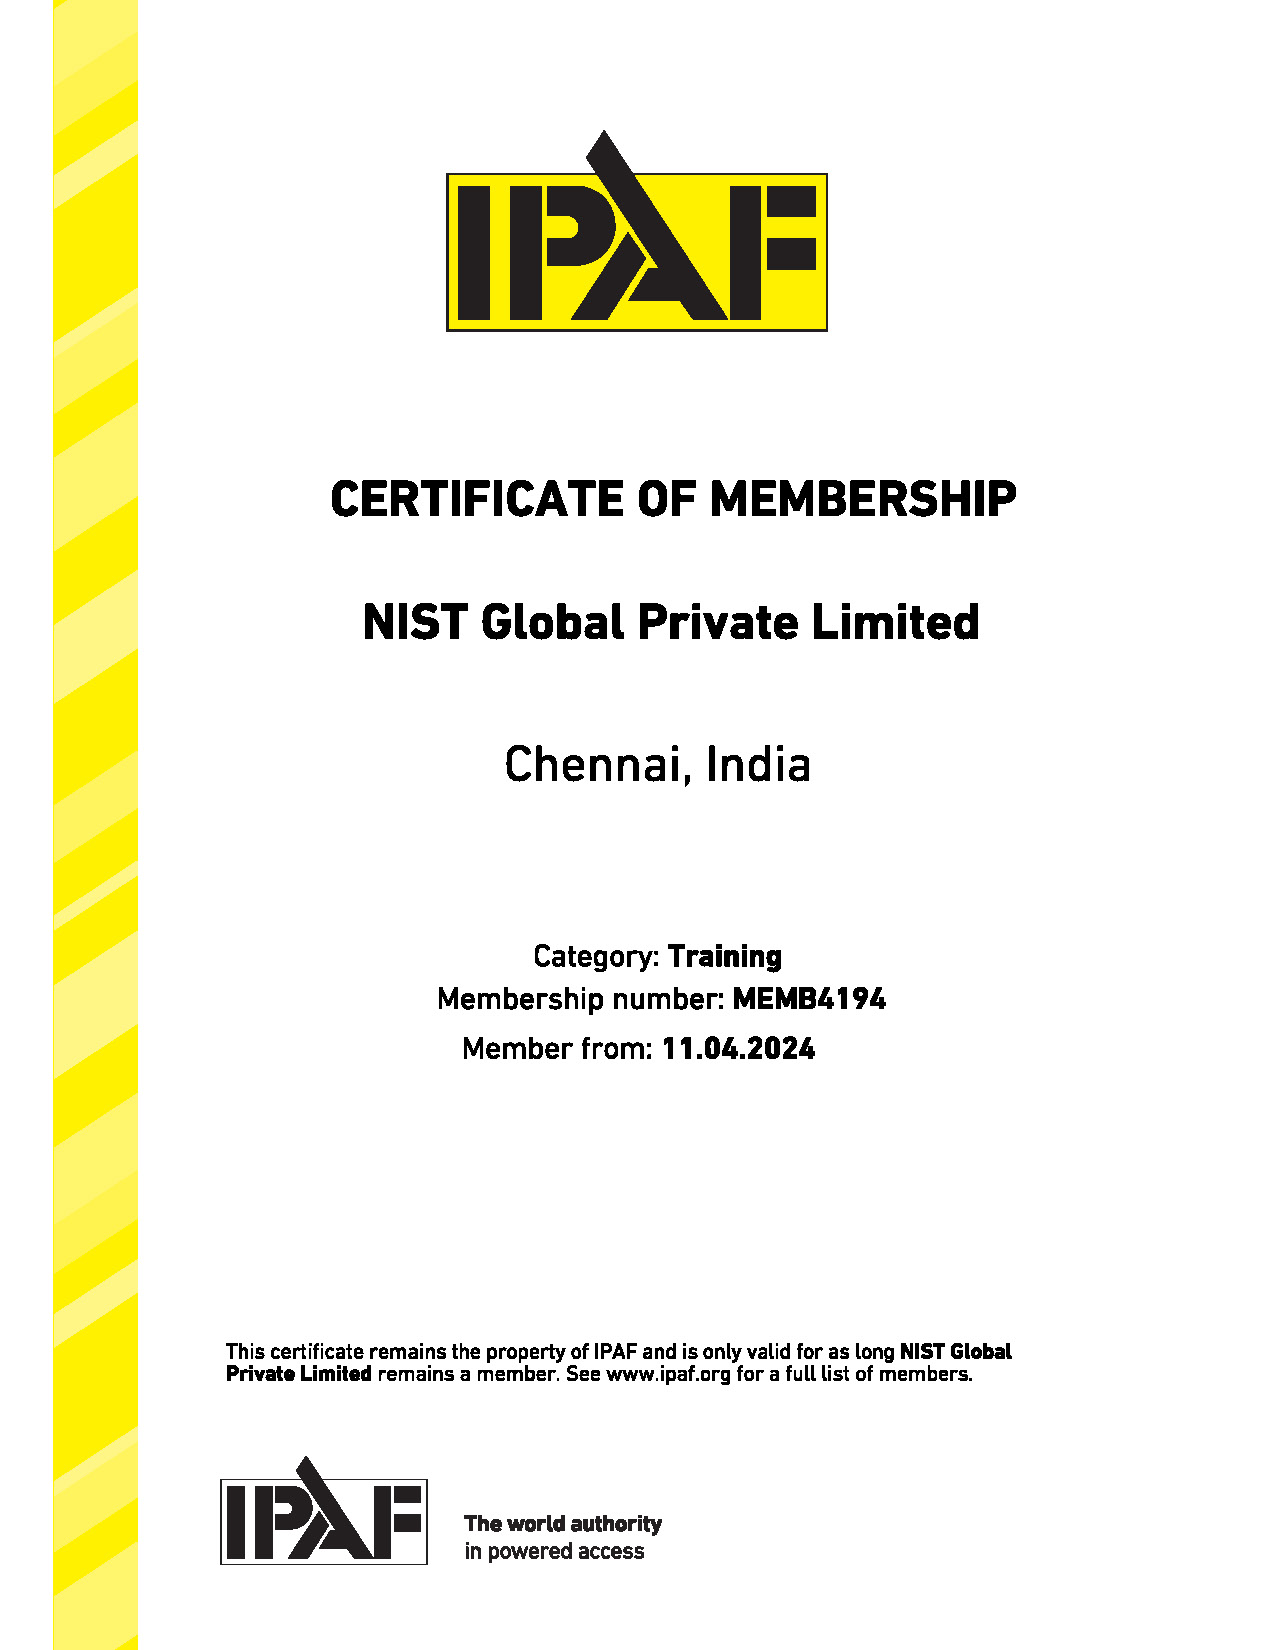 IPAF-certificate